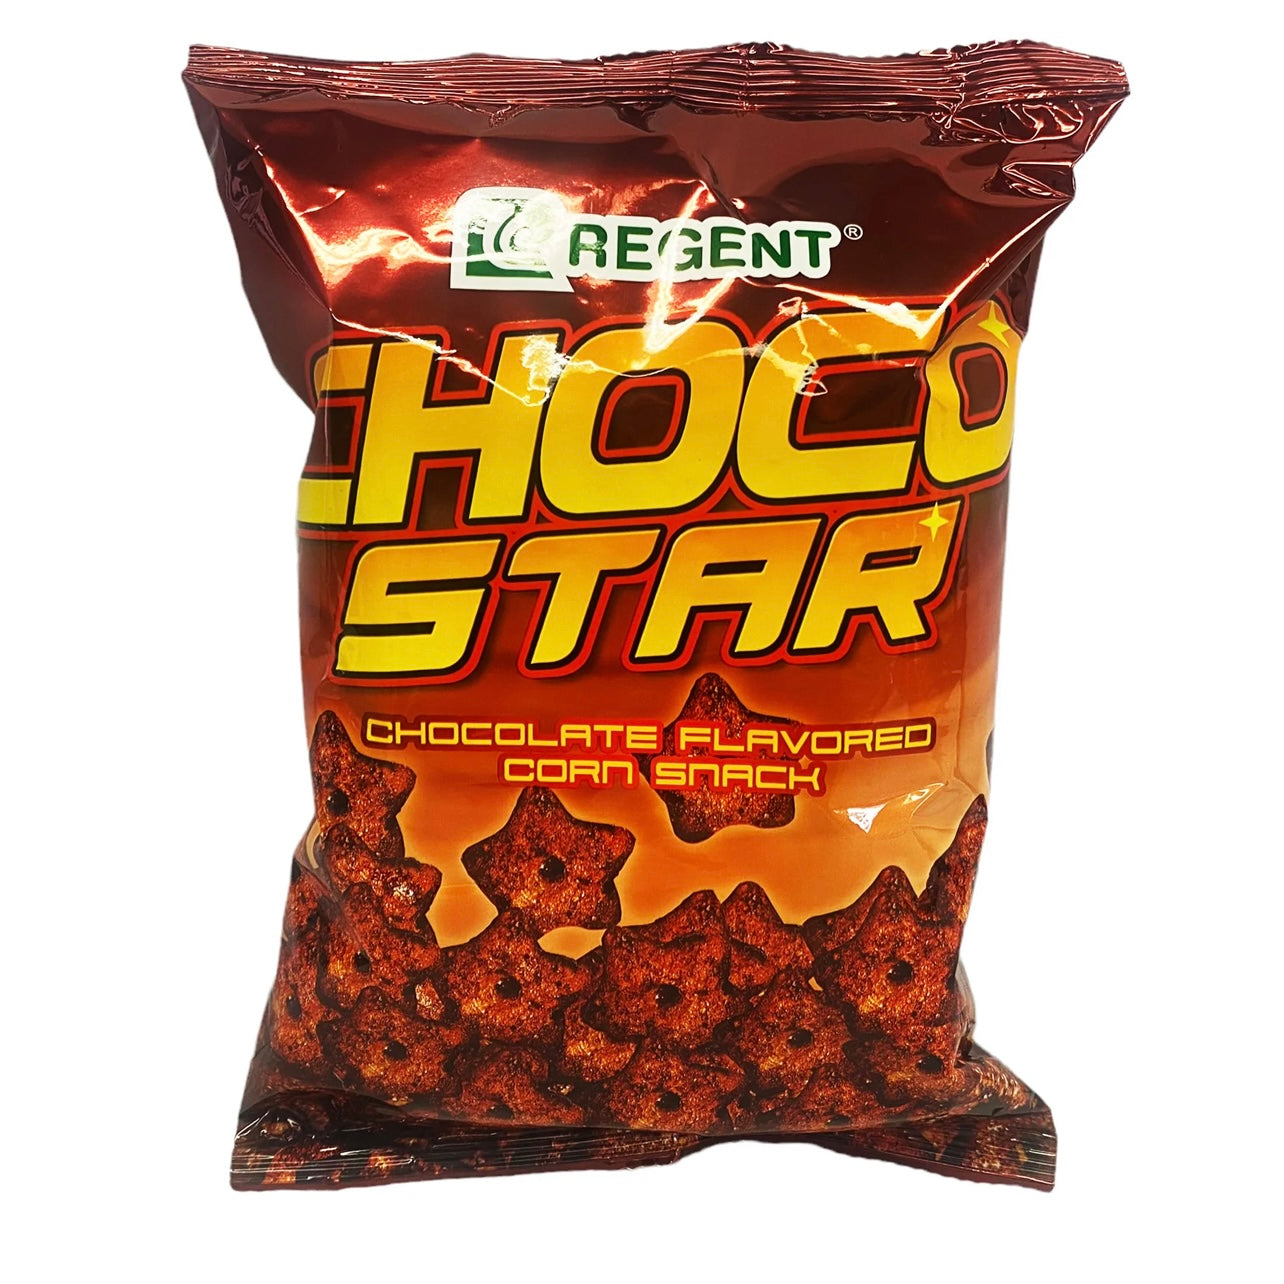 Regent Choco Star